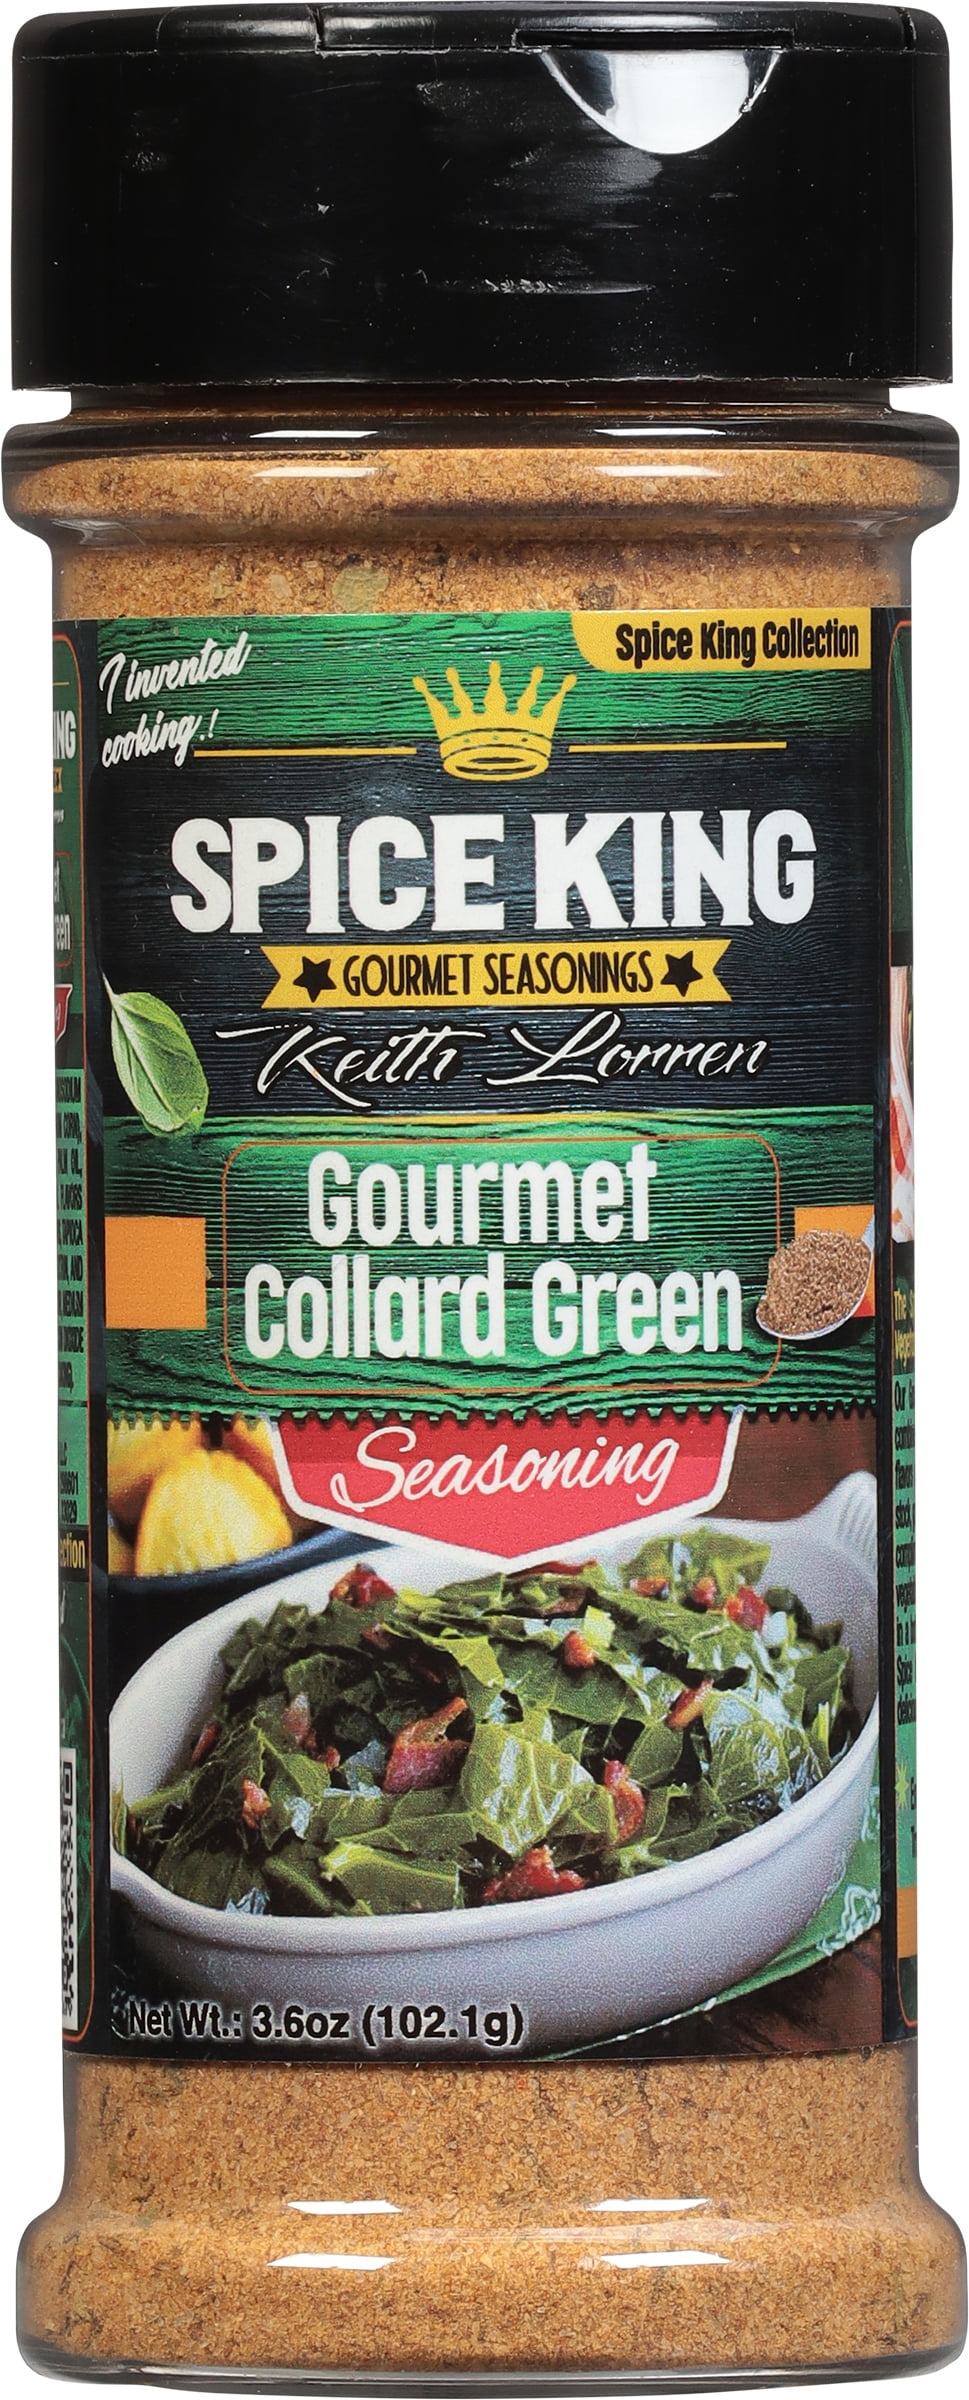 Spice King Collard Green